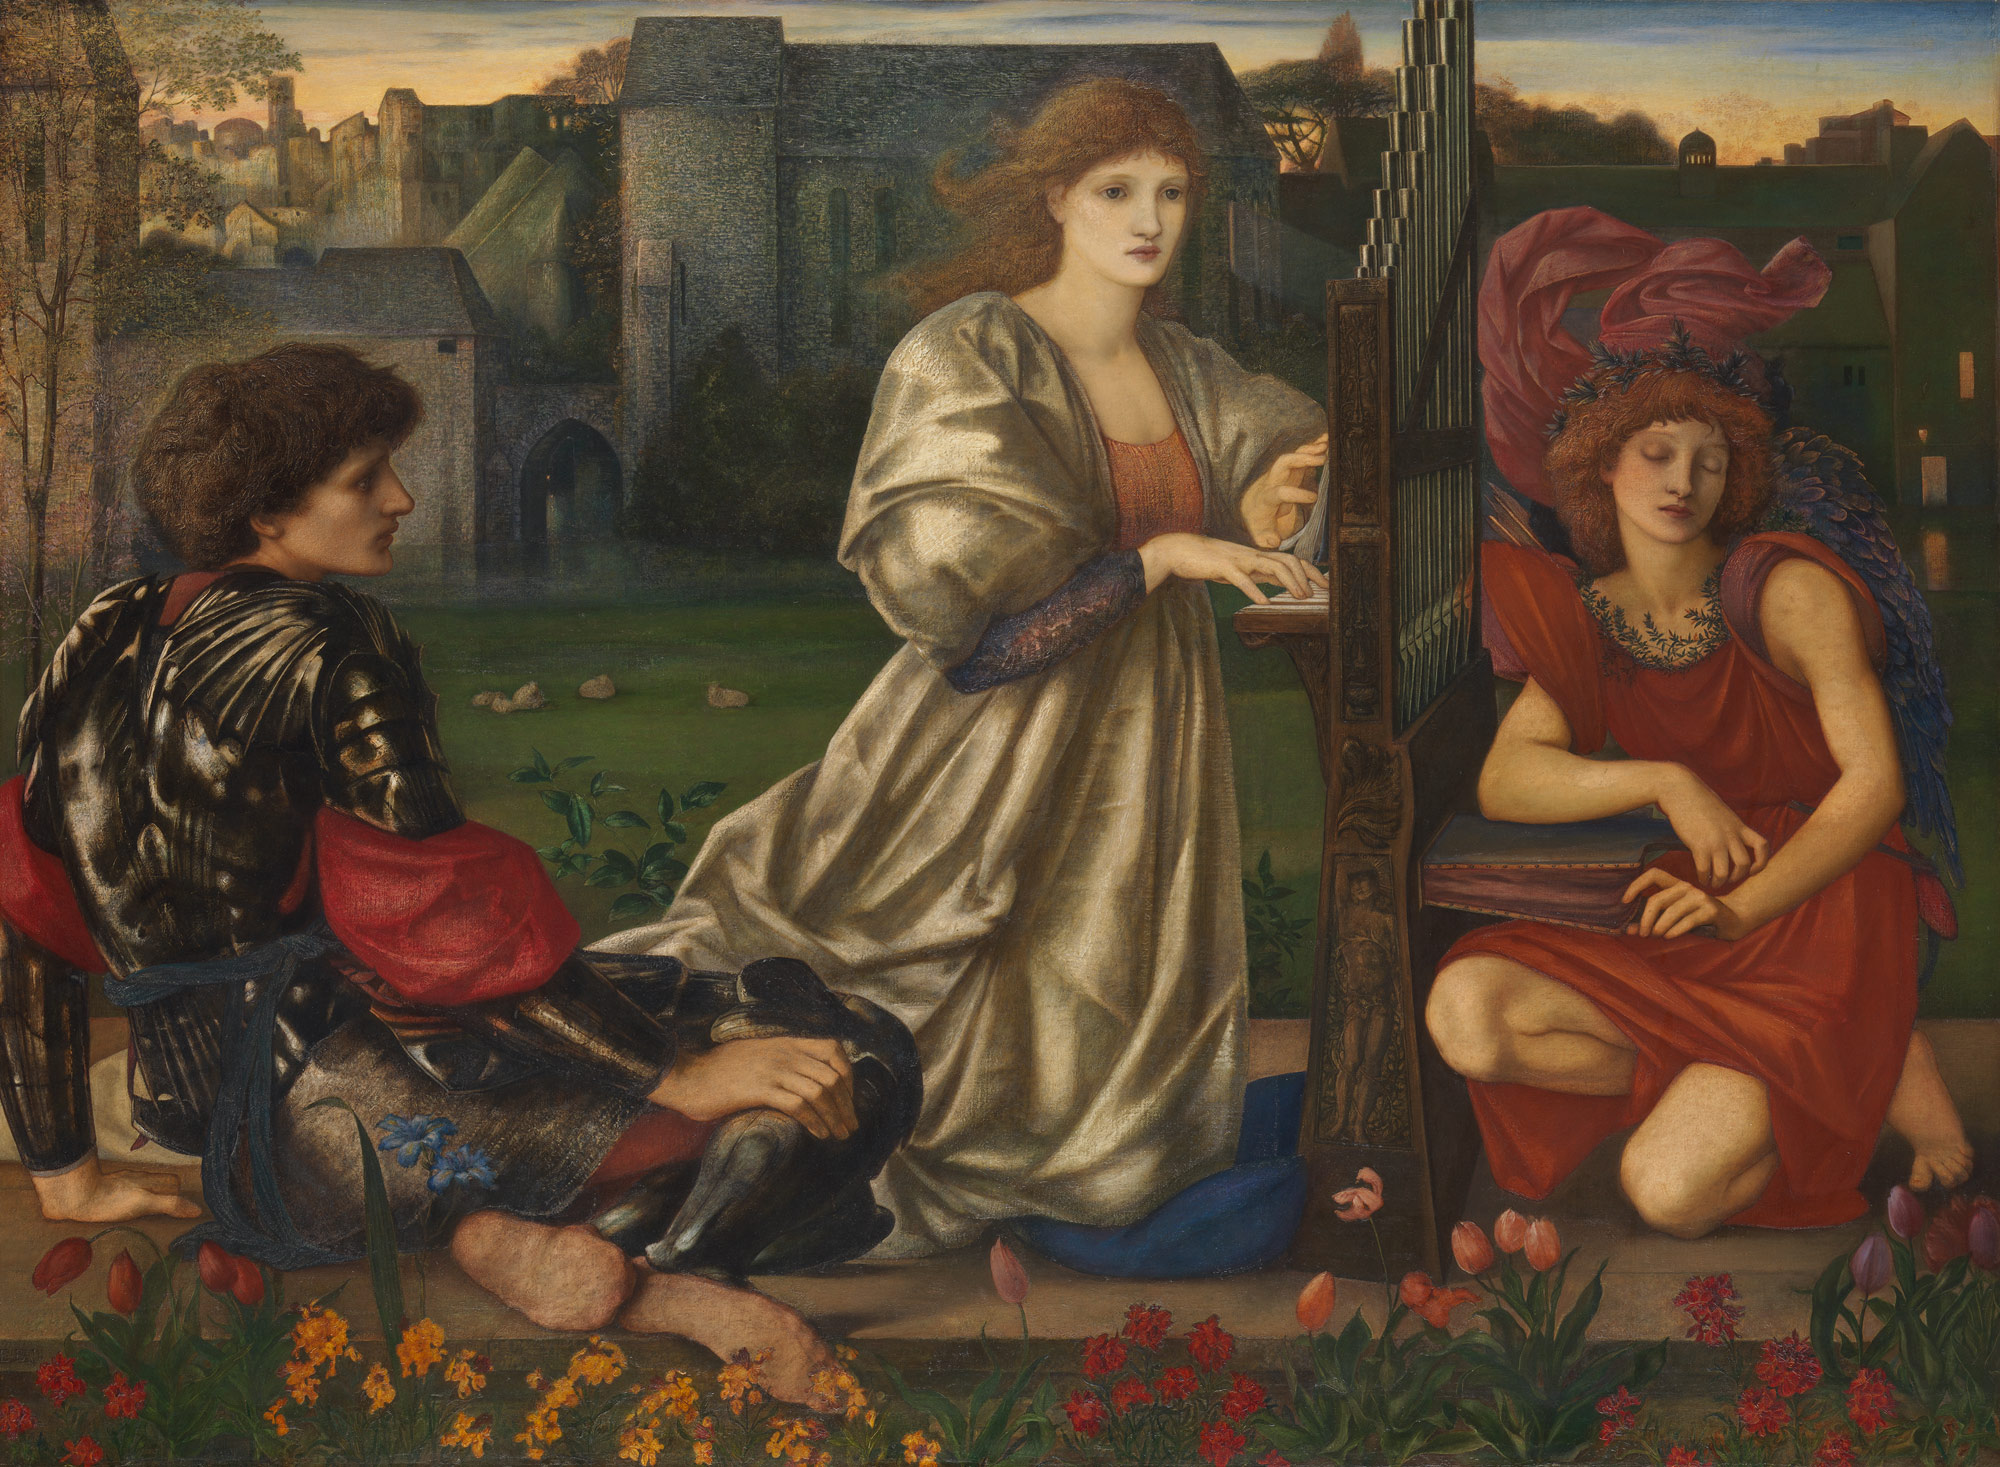 Das Liebeslied by Edward Burne-Jones - 1868-77 - 114.3 x 155.9 cm Metropolitan Museum of Art